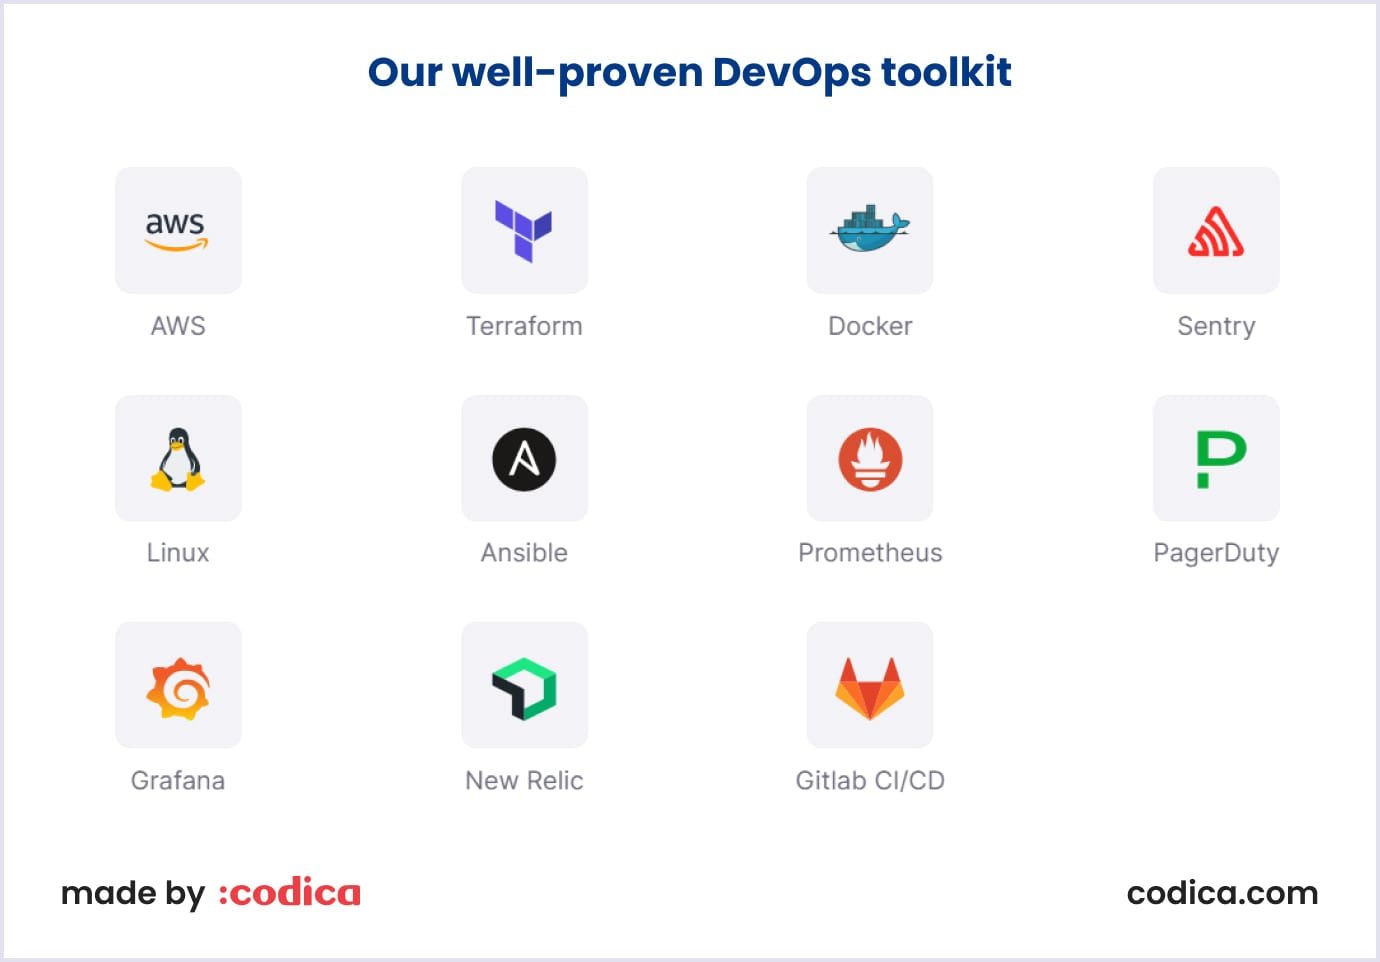 Our proven DevOps tools